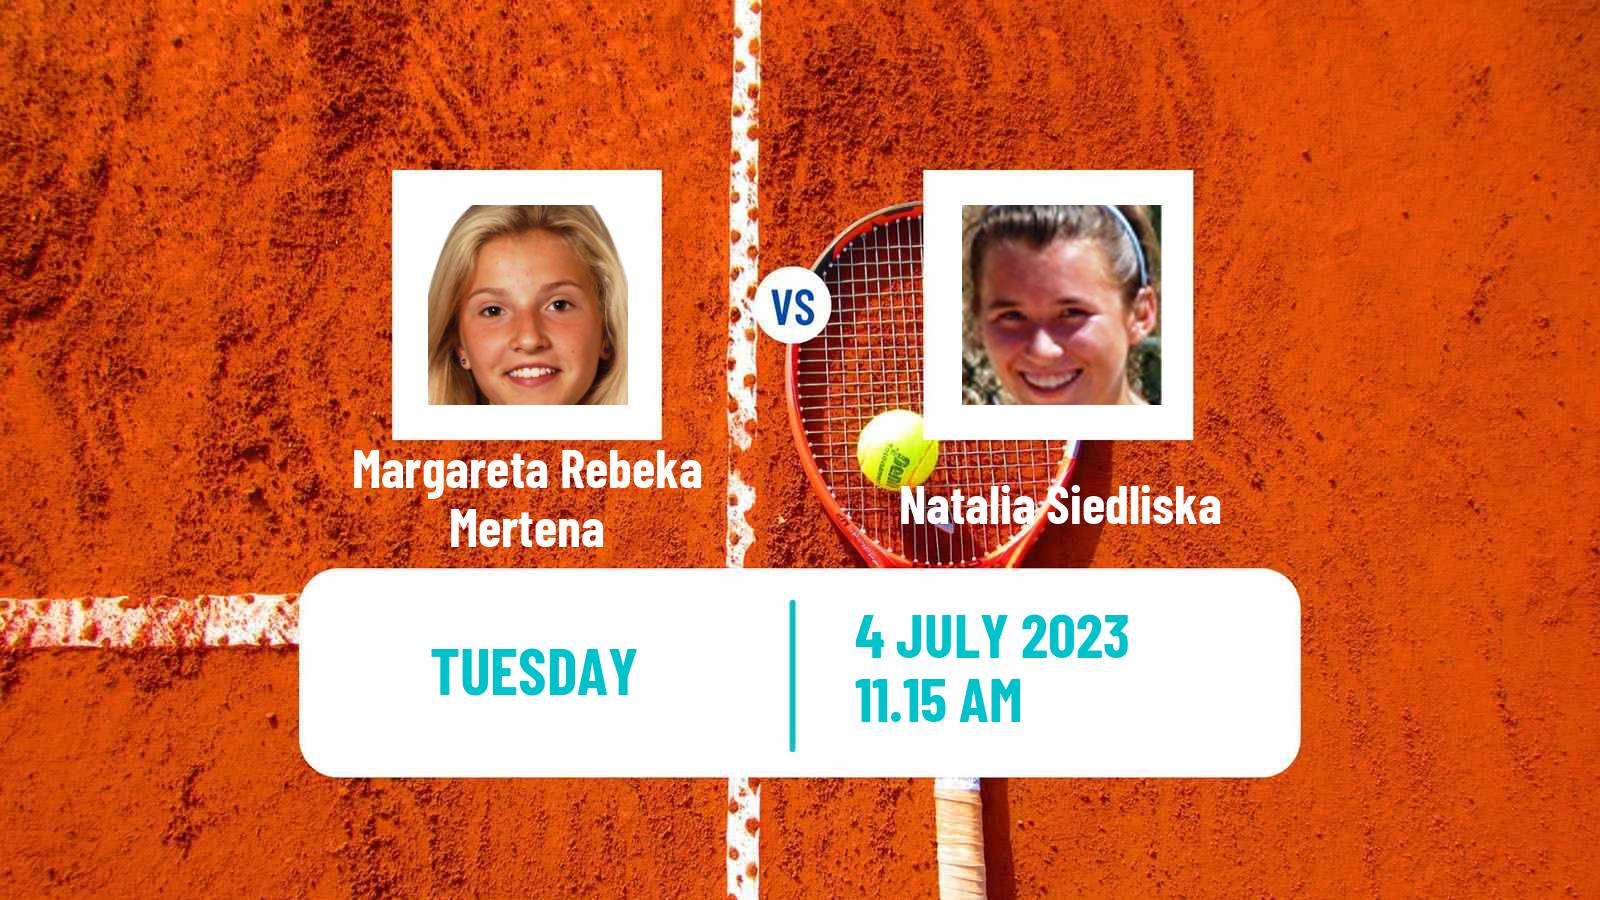 Tennis ITF W60 Liepaja Women Margareta Rebeka Mertena - Natalia Siedliska